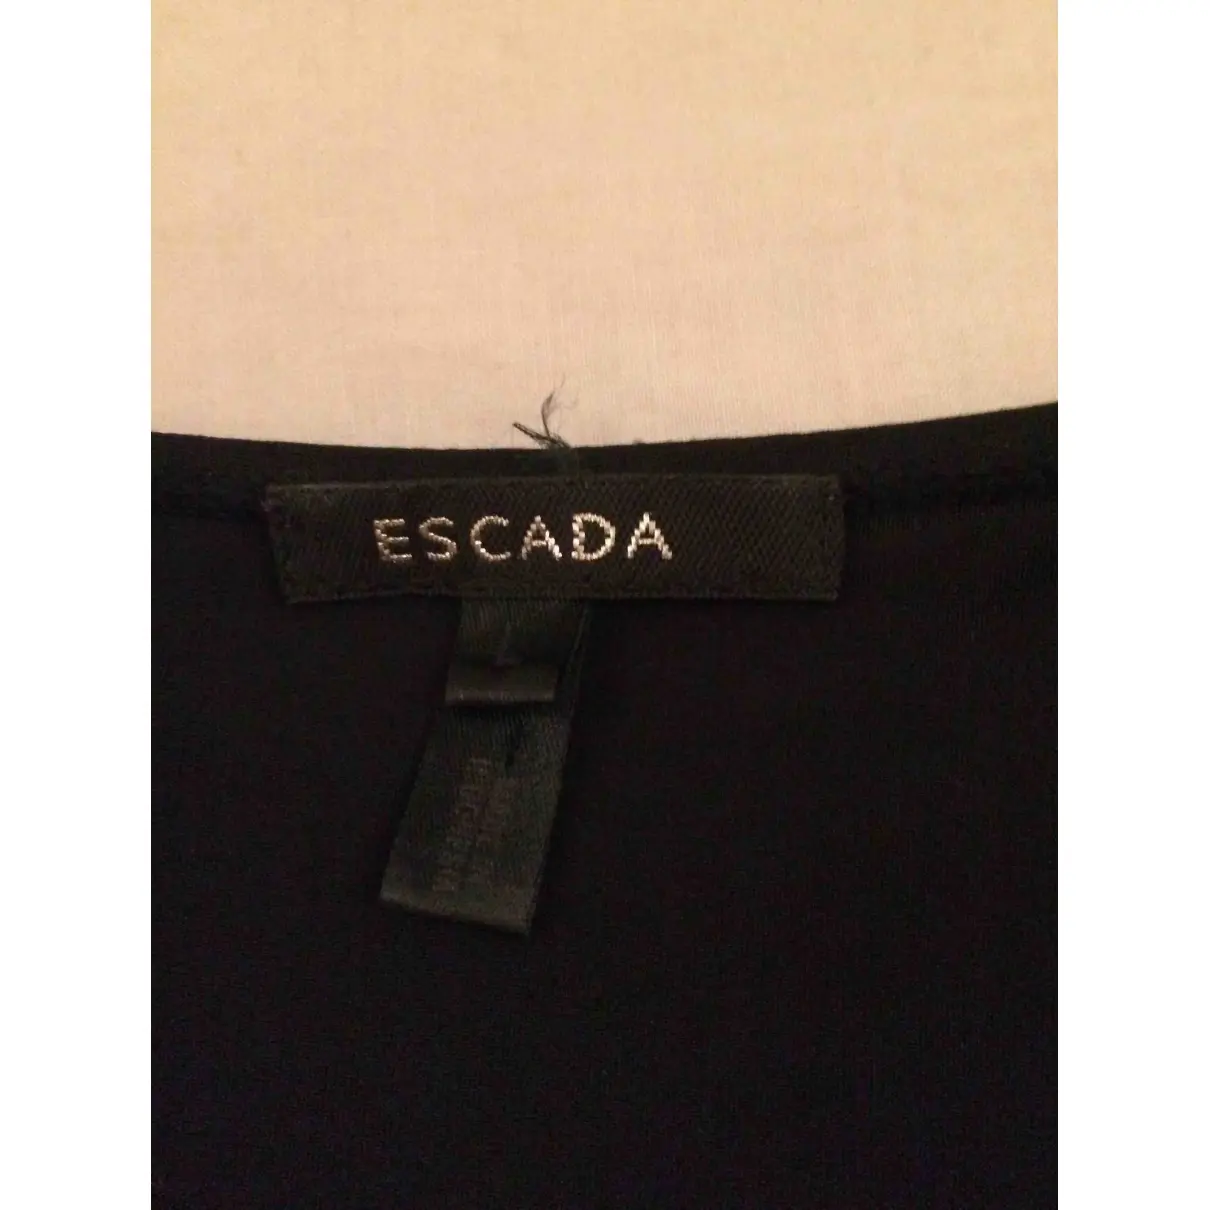 Buy Escada Glitter vest online